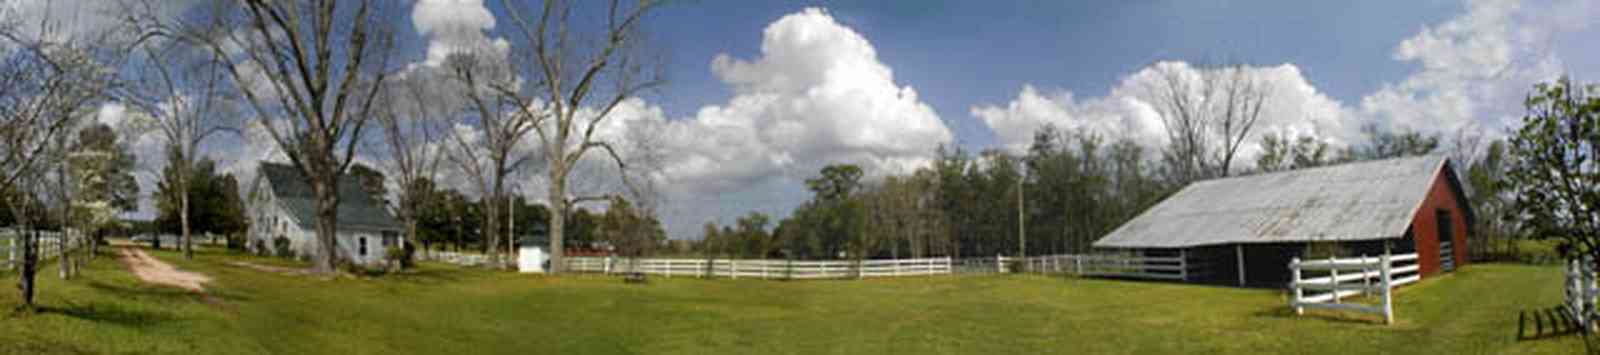 Molino:-Green-Farm_03.jpg:  farmland, pasture, barn, wooden fence, split rail fence, pasture land,